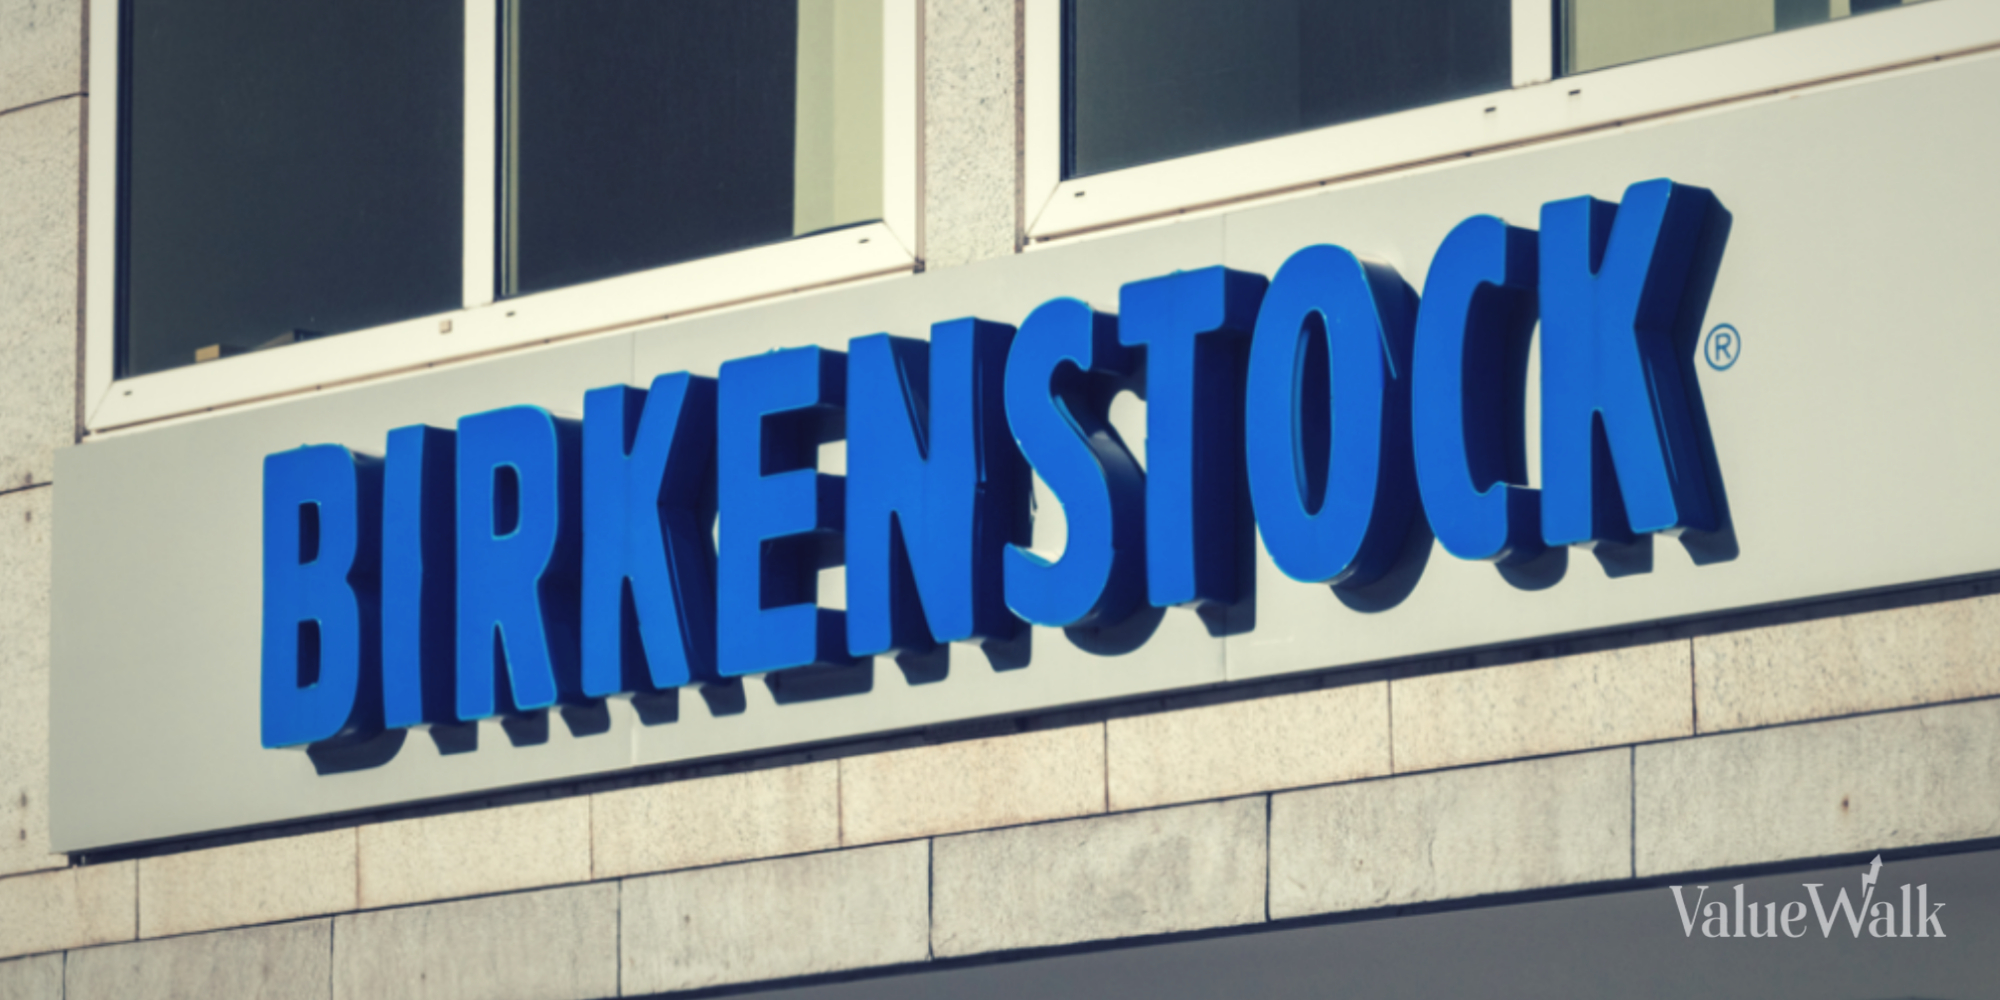 Birkenstock Plans September IPO At $8 Billion Valuation On Barbie